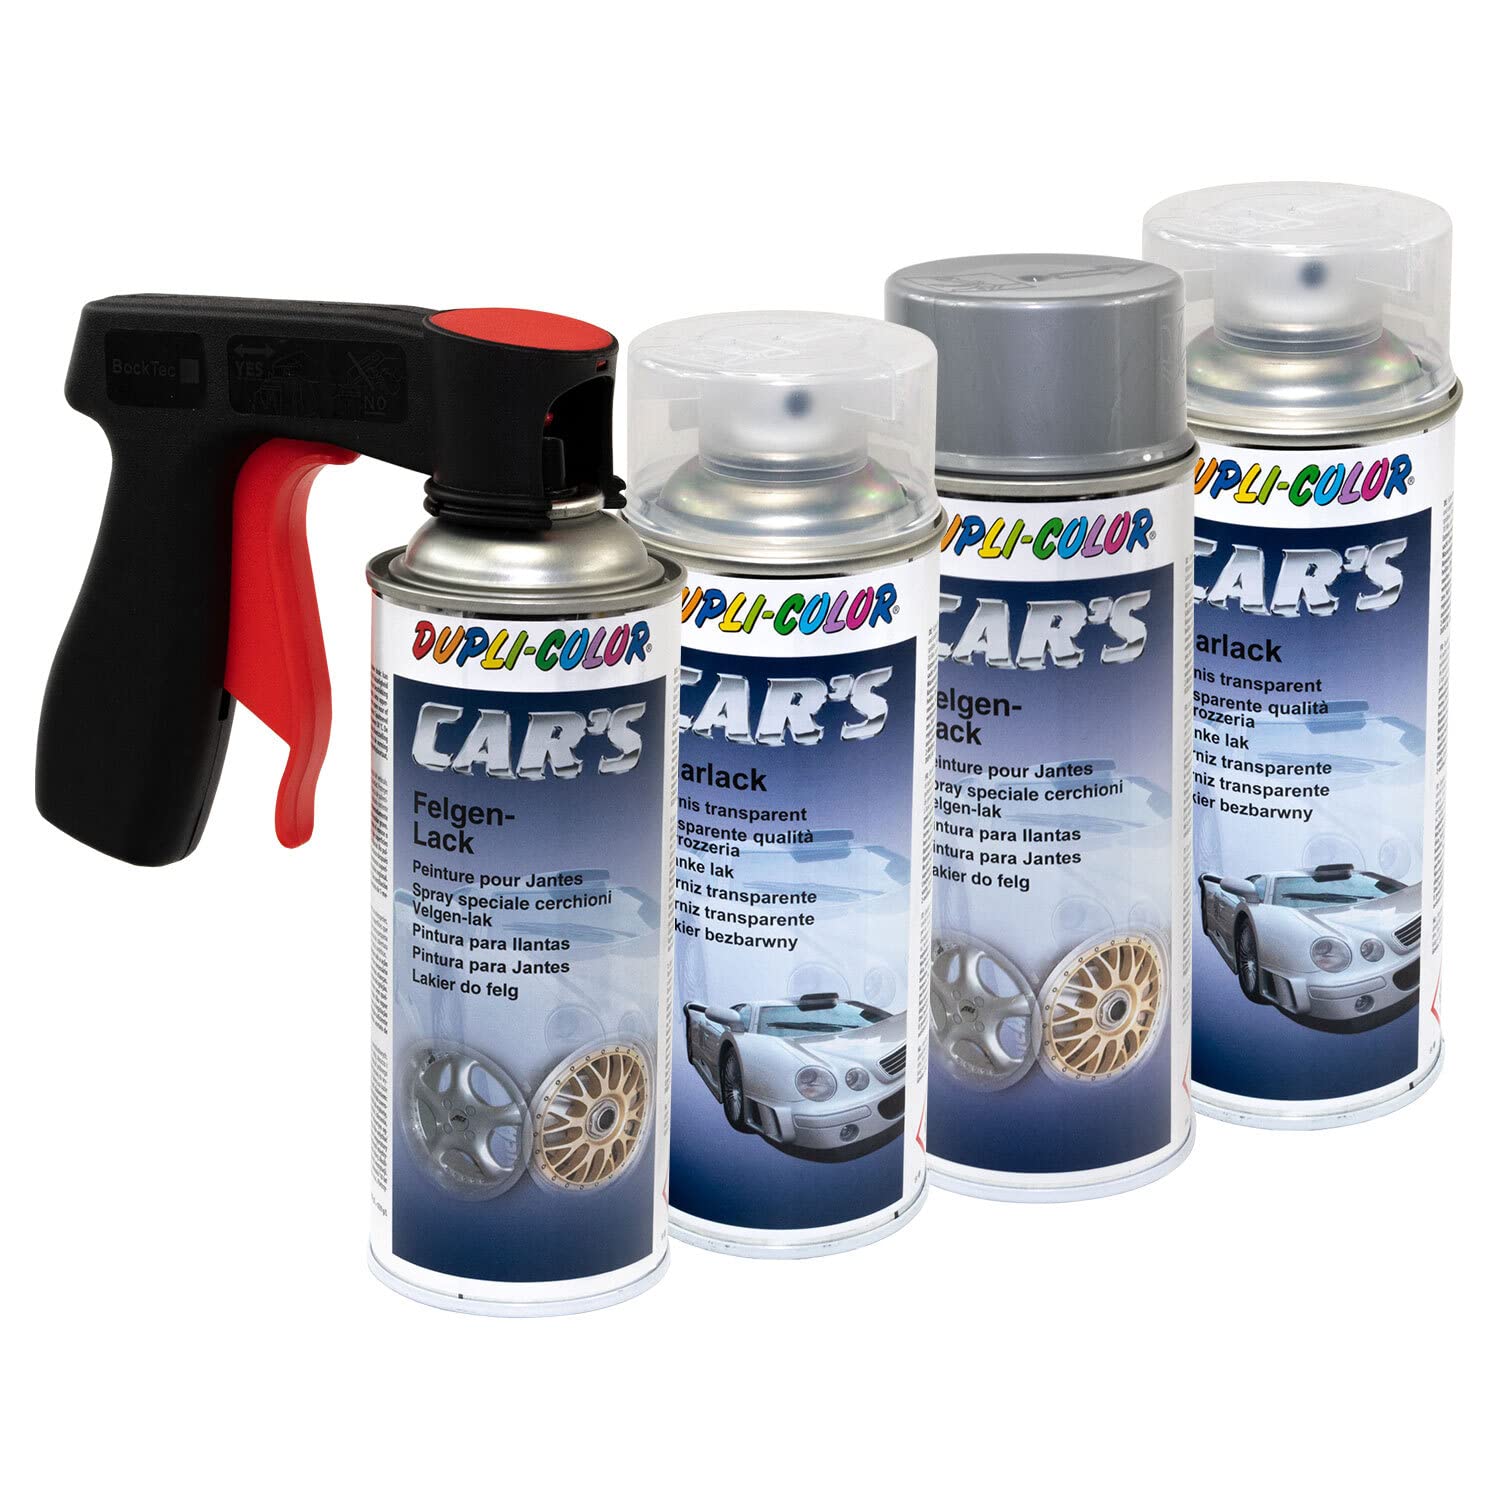 Felgenlack Lack Spray Car's Dupli Color 385919 Silber 2 X 400 ml + Klarlack 385858 2 X 400 ml mit Pistolengriff